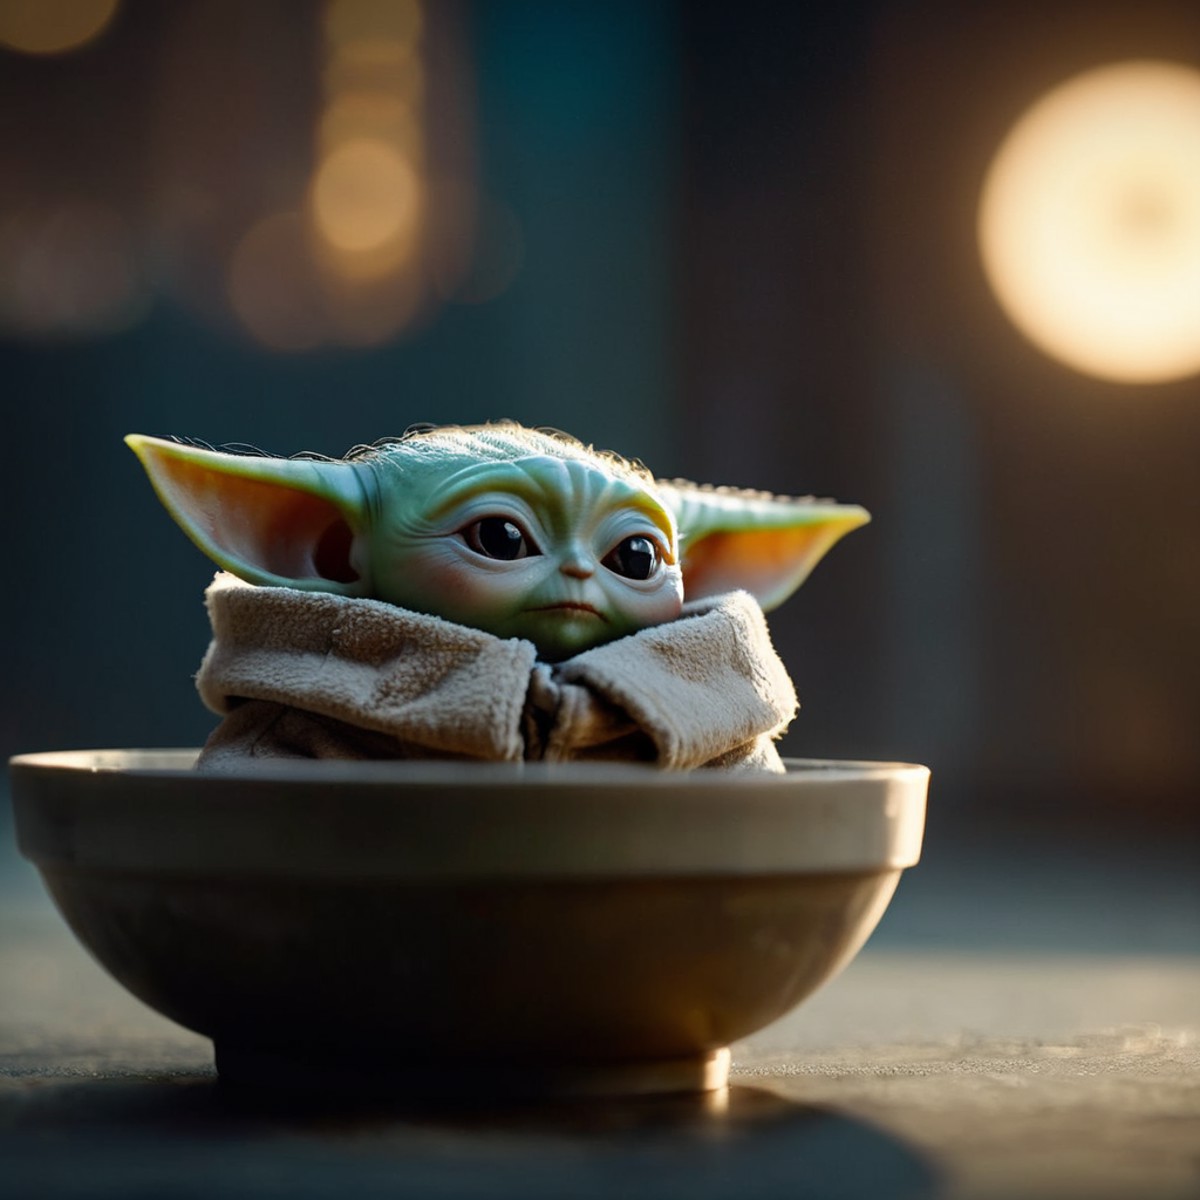 cinematic film still of  <lora:Grogu:1>
Grogu a baby yoda is sitting in a bowl in star wars universe, shallow depth of fie...